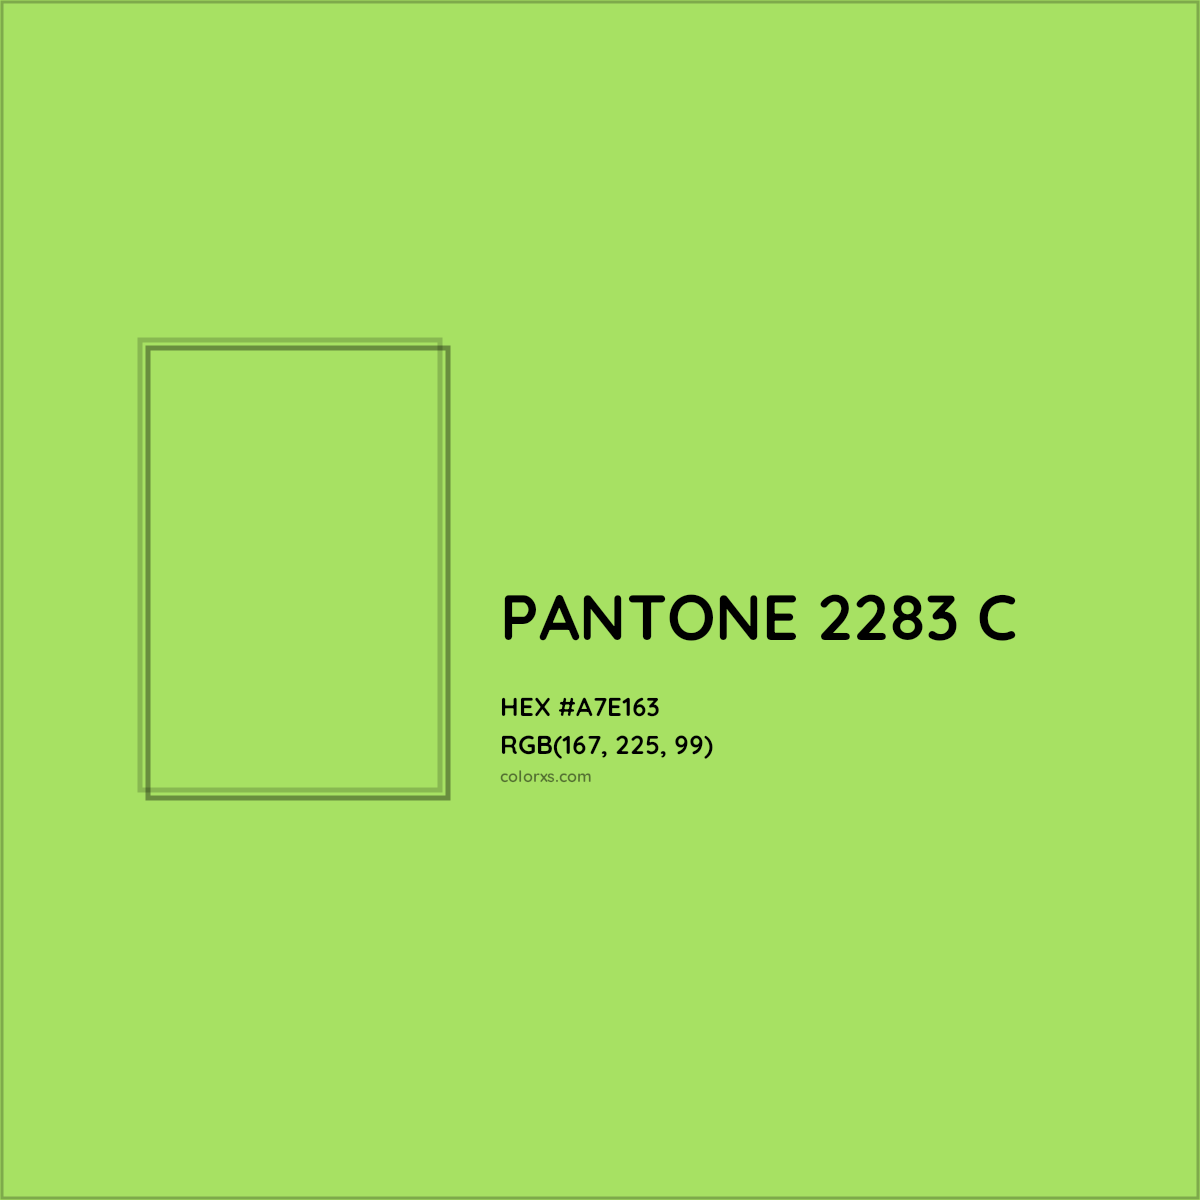 HEX #A7E163 PANTONE 2283 C CMS Pantone PMS - Color Code